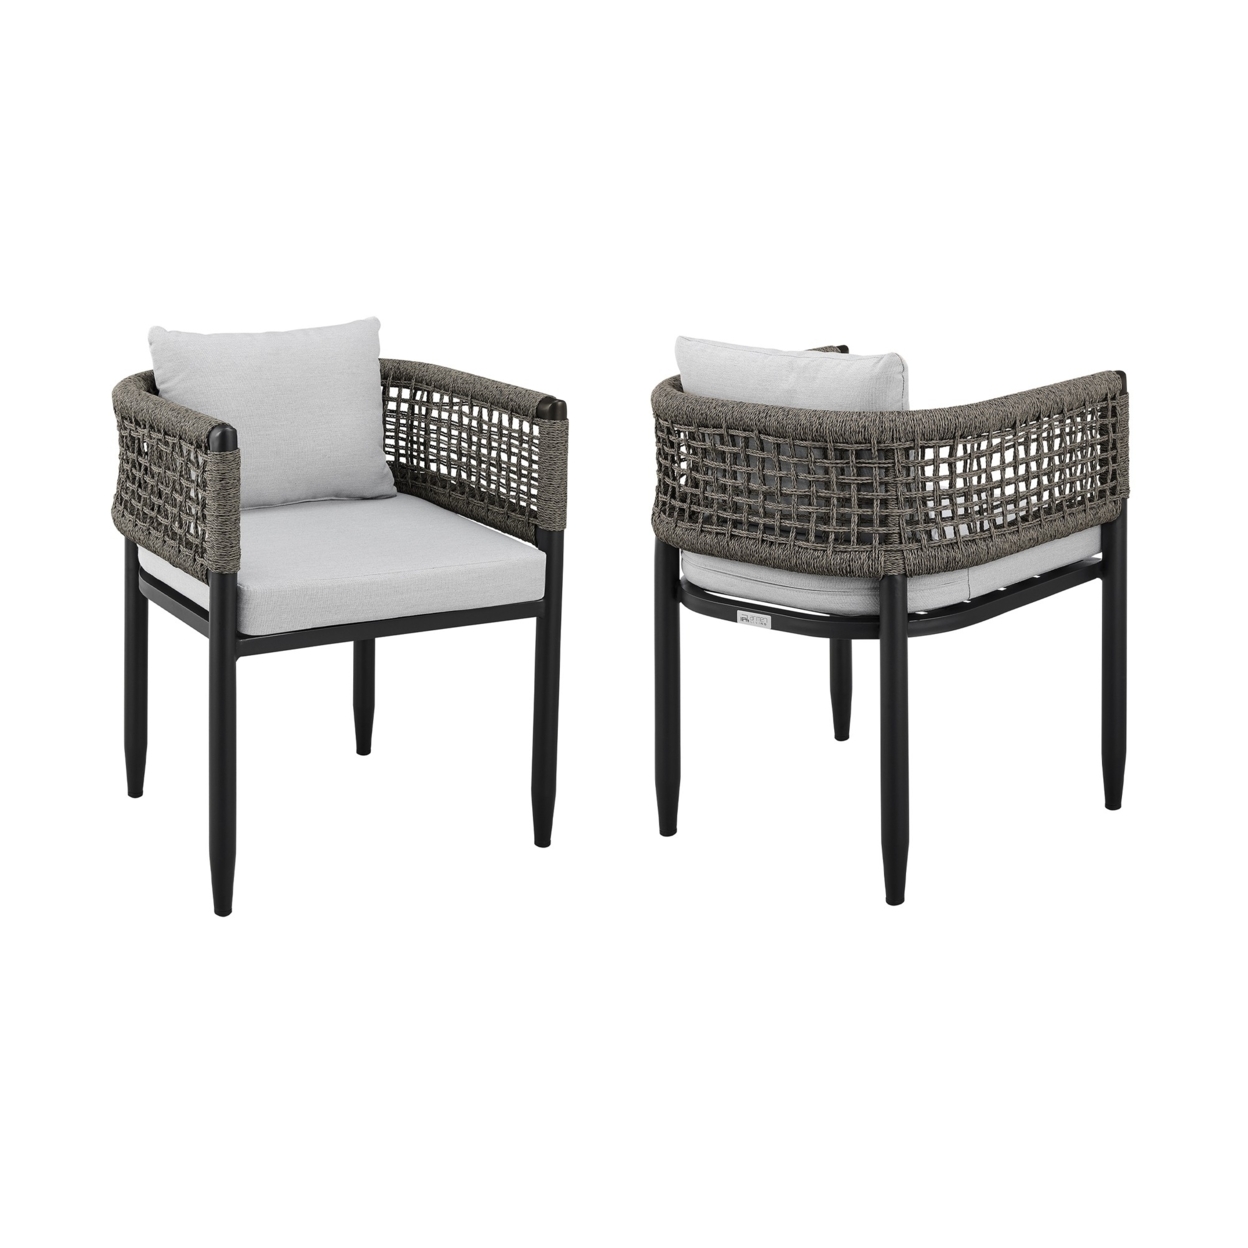 Troy 23 Inch Aluminum Patio Dining Chair, Set Of 2, Gray Rope Woven, Black- Saltoro Sherpi